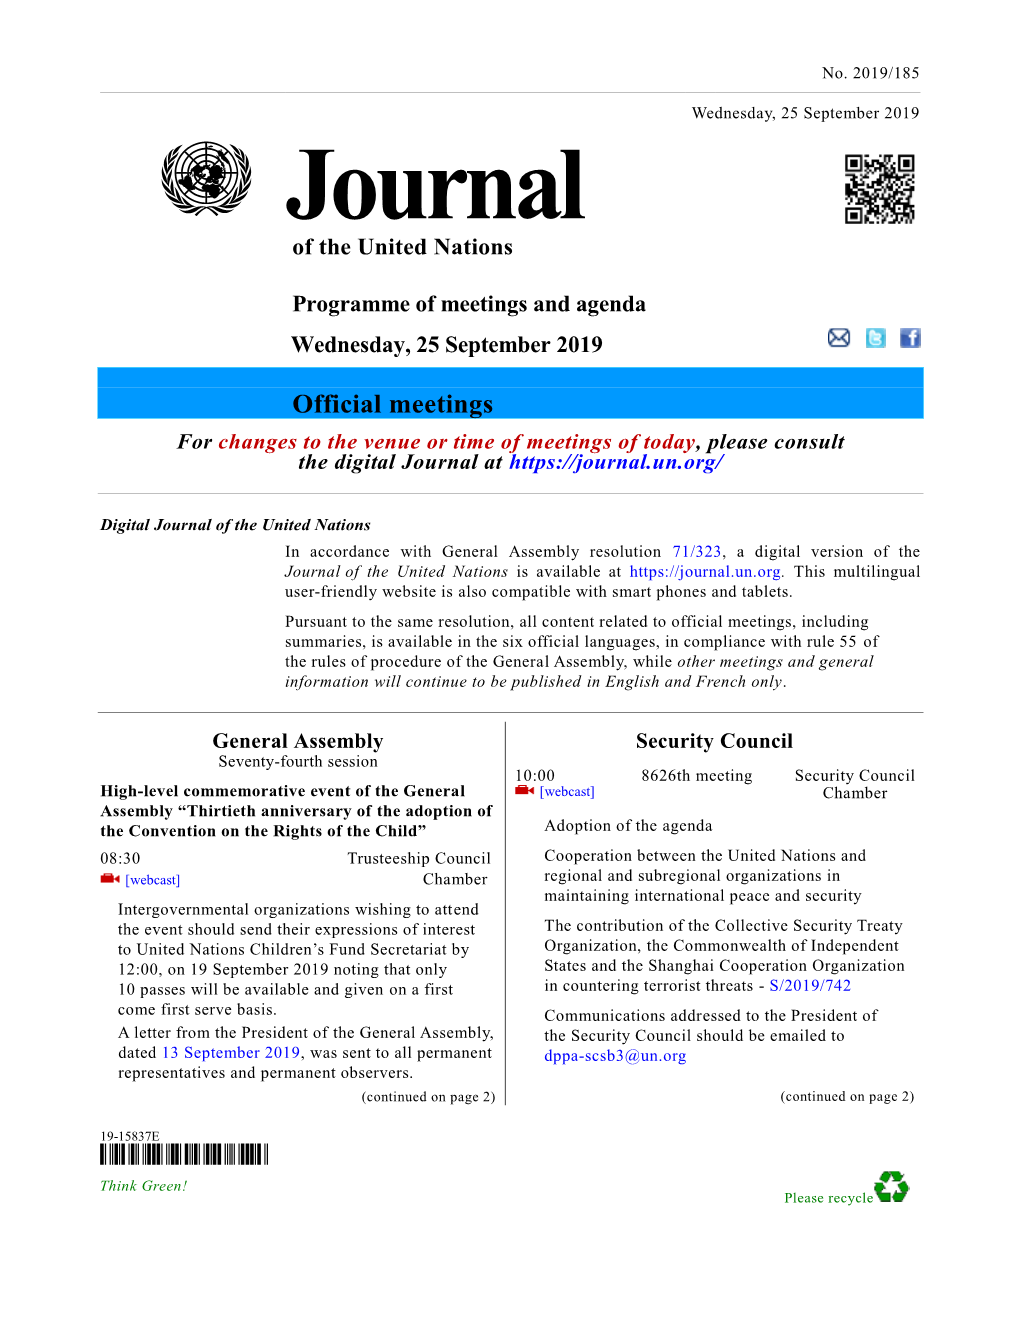 Journal Unit (E-Mail Journal@Un.Org; Tel